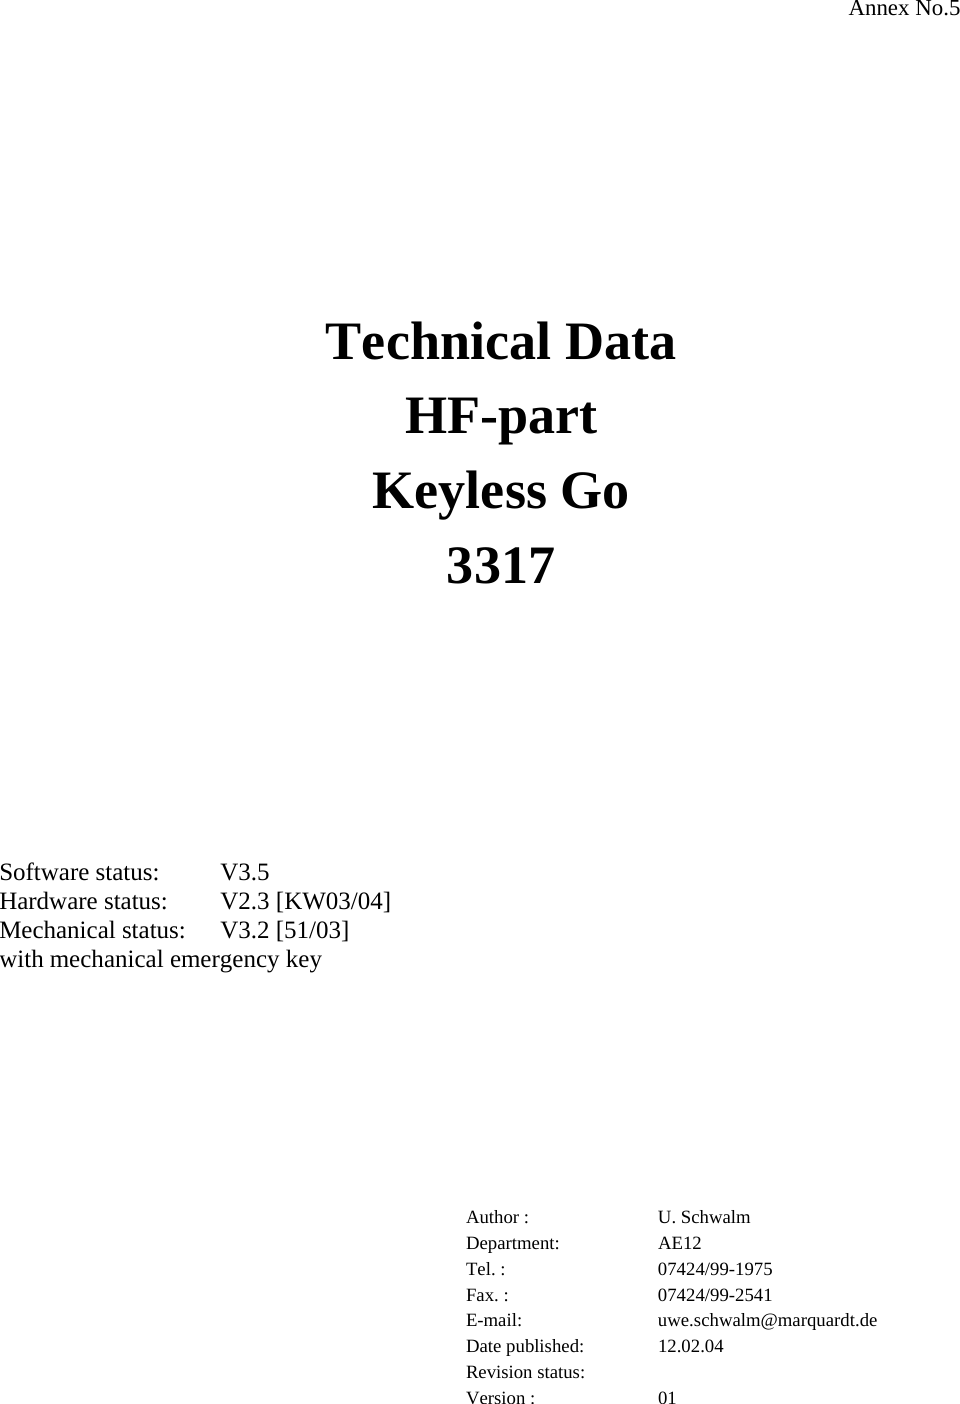 Annex No.5           Technical Data HF-part Keyless Go  3317       Software status:  V3.5  Hardware status:  V2.3 [KW03/04] Mechanical status:  V3.2 [51/03] with mechanical emergency key         Author :  U. Schwalm Department: AE12 Tel. :  07424/99-1975 Fax. :  07424/99-2541 E-mail: uwe.schwalm@marquardt.de Date published:  12.02.04 Revision status:   Version :  01 